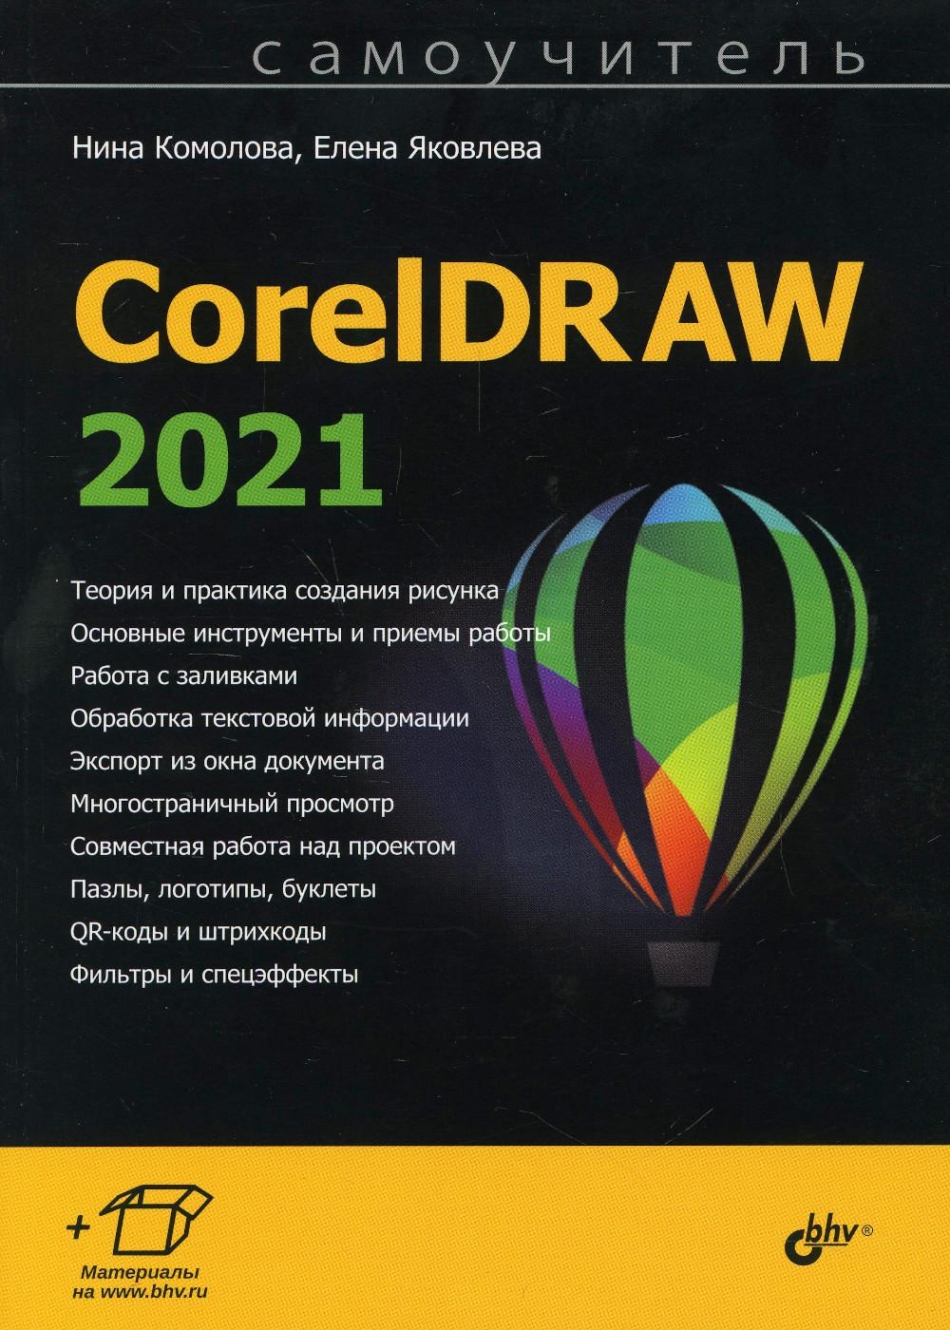  ..,   ..  CorelDRAW 2021 